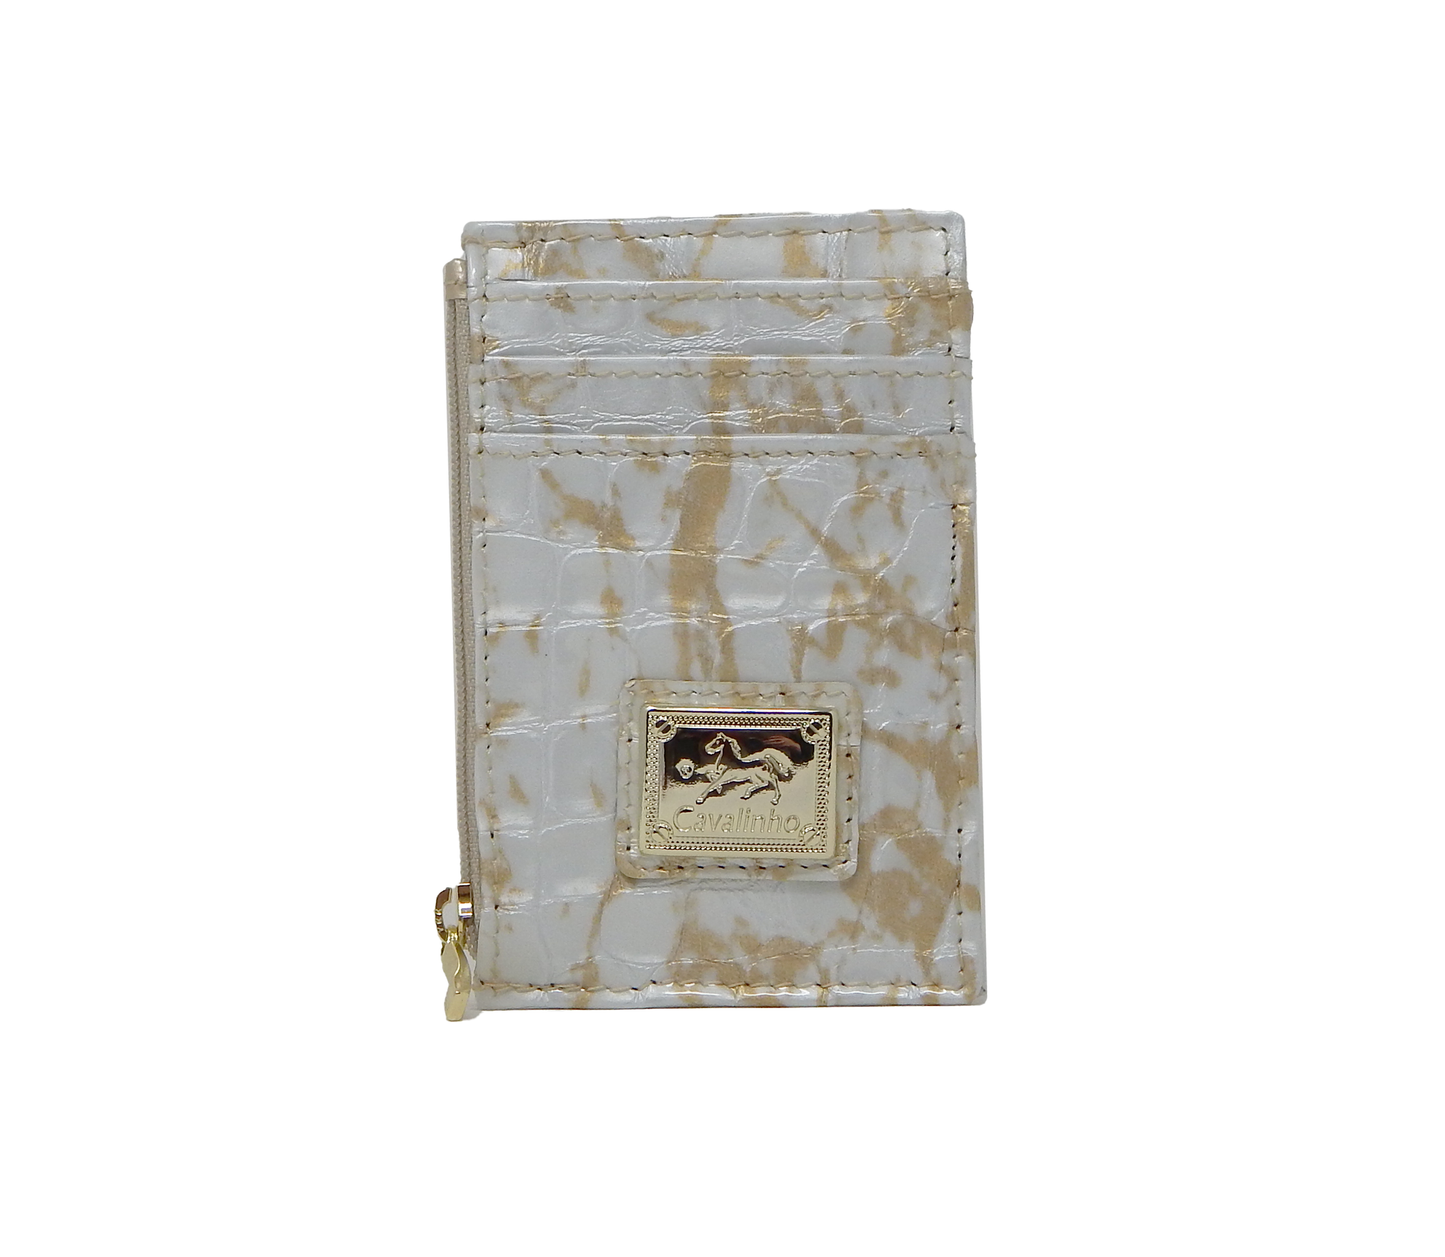 #color_ Beige White | Cavalinho Gallop Leather Card Holder Slim Wallet - Beige White - 28170573.31_1